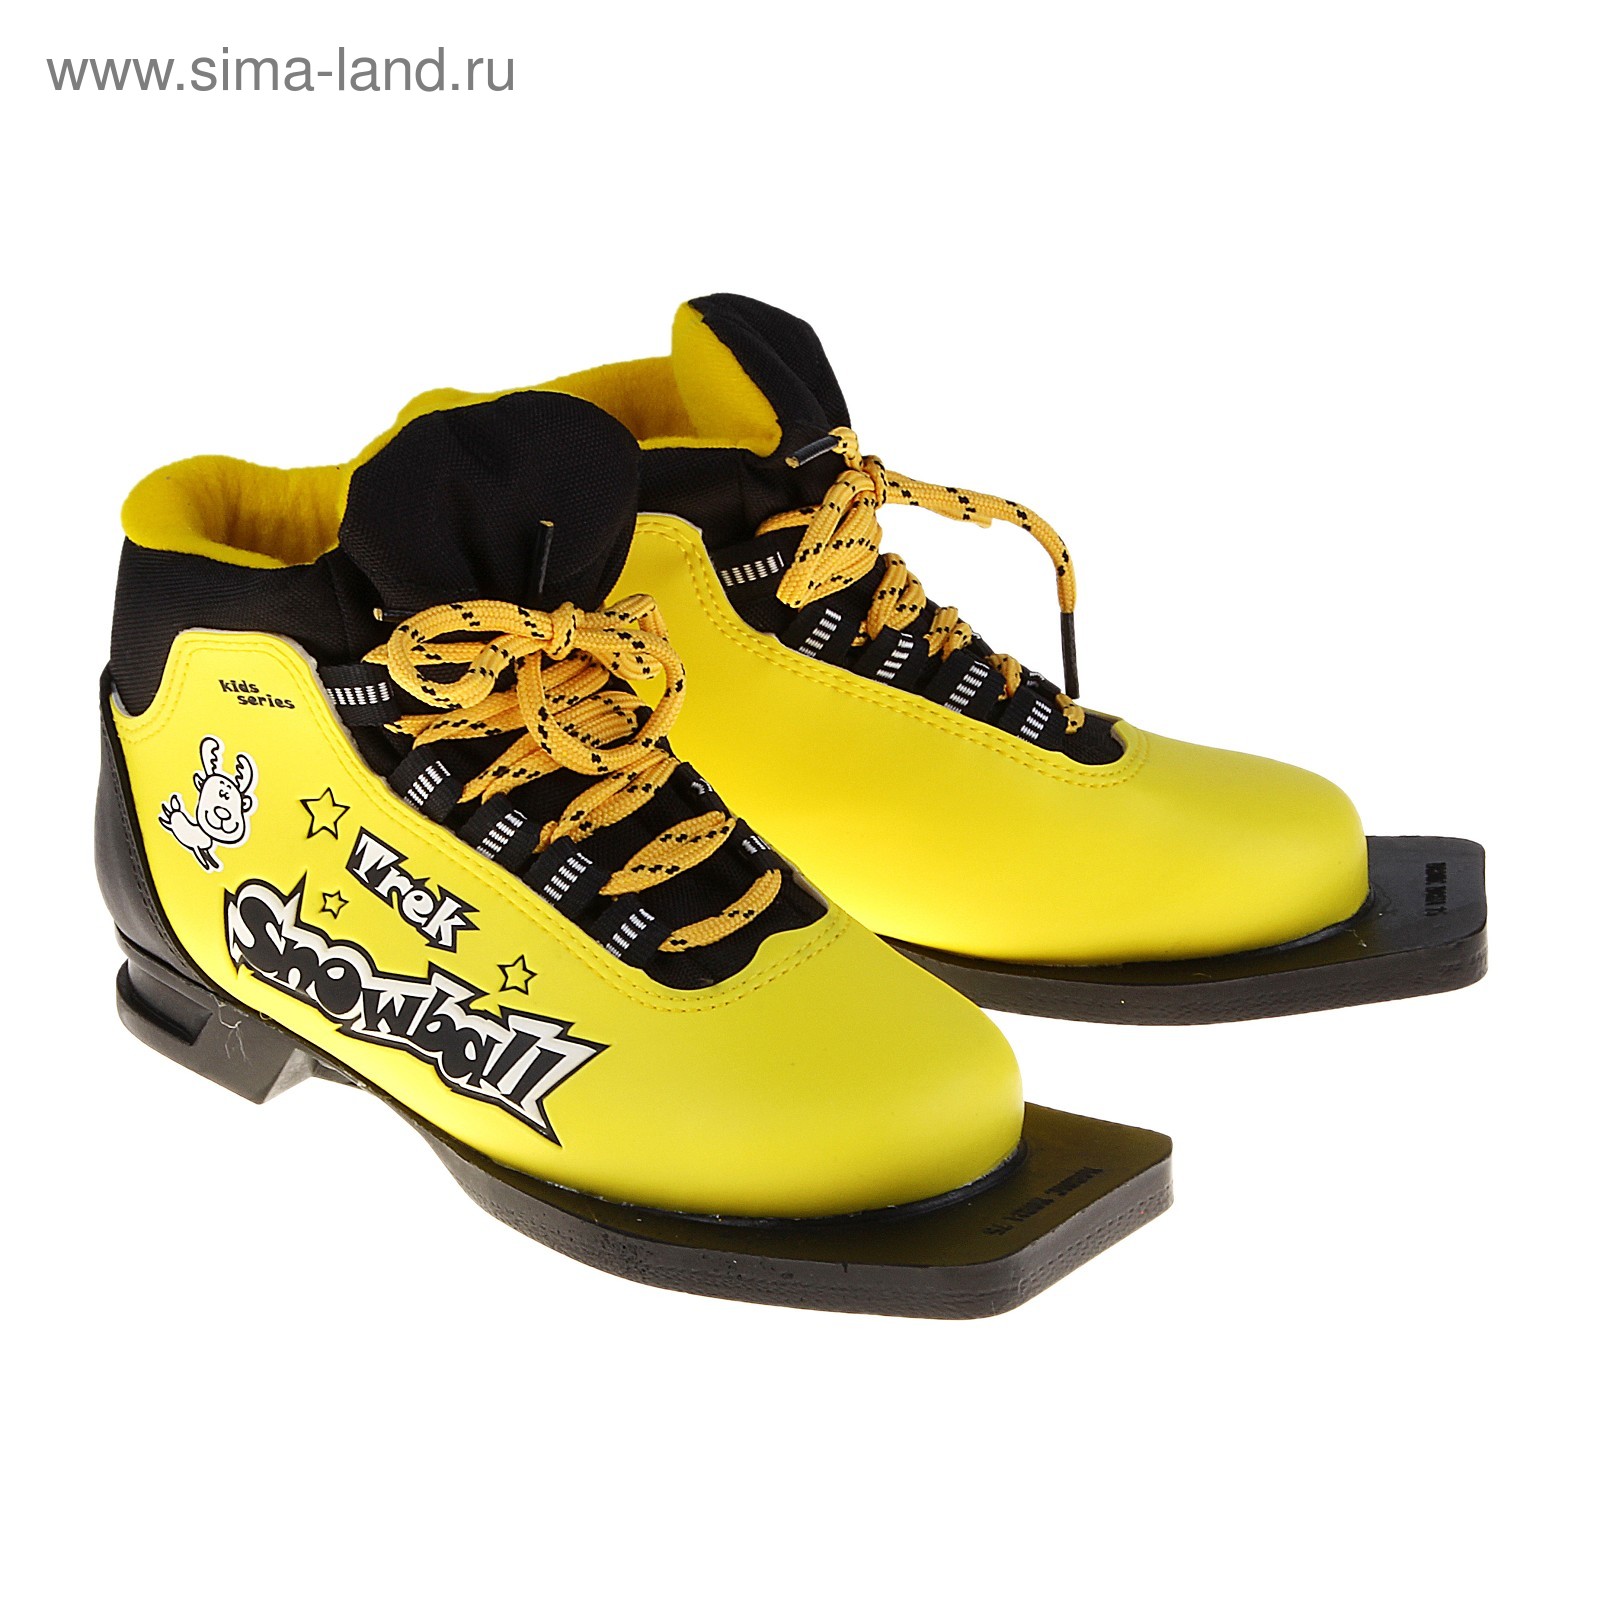 Ботинки лыжные TREK Snowball NN 75 ИК, цвет желтый, логотип черный, р. 32